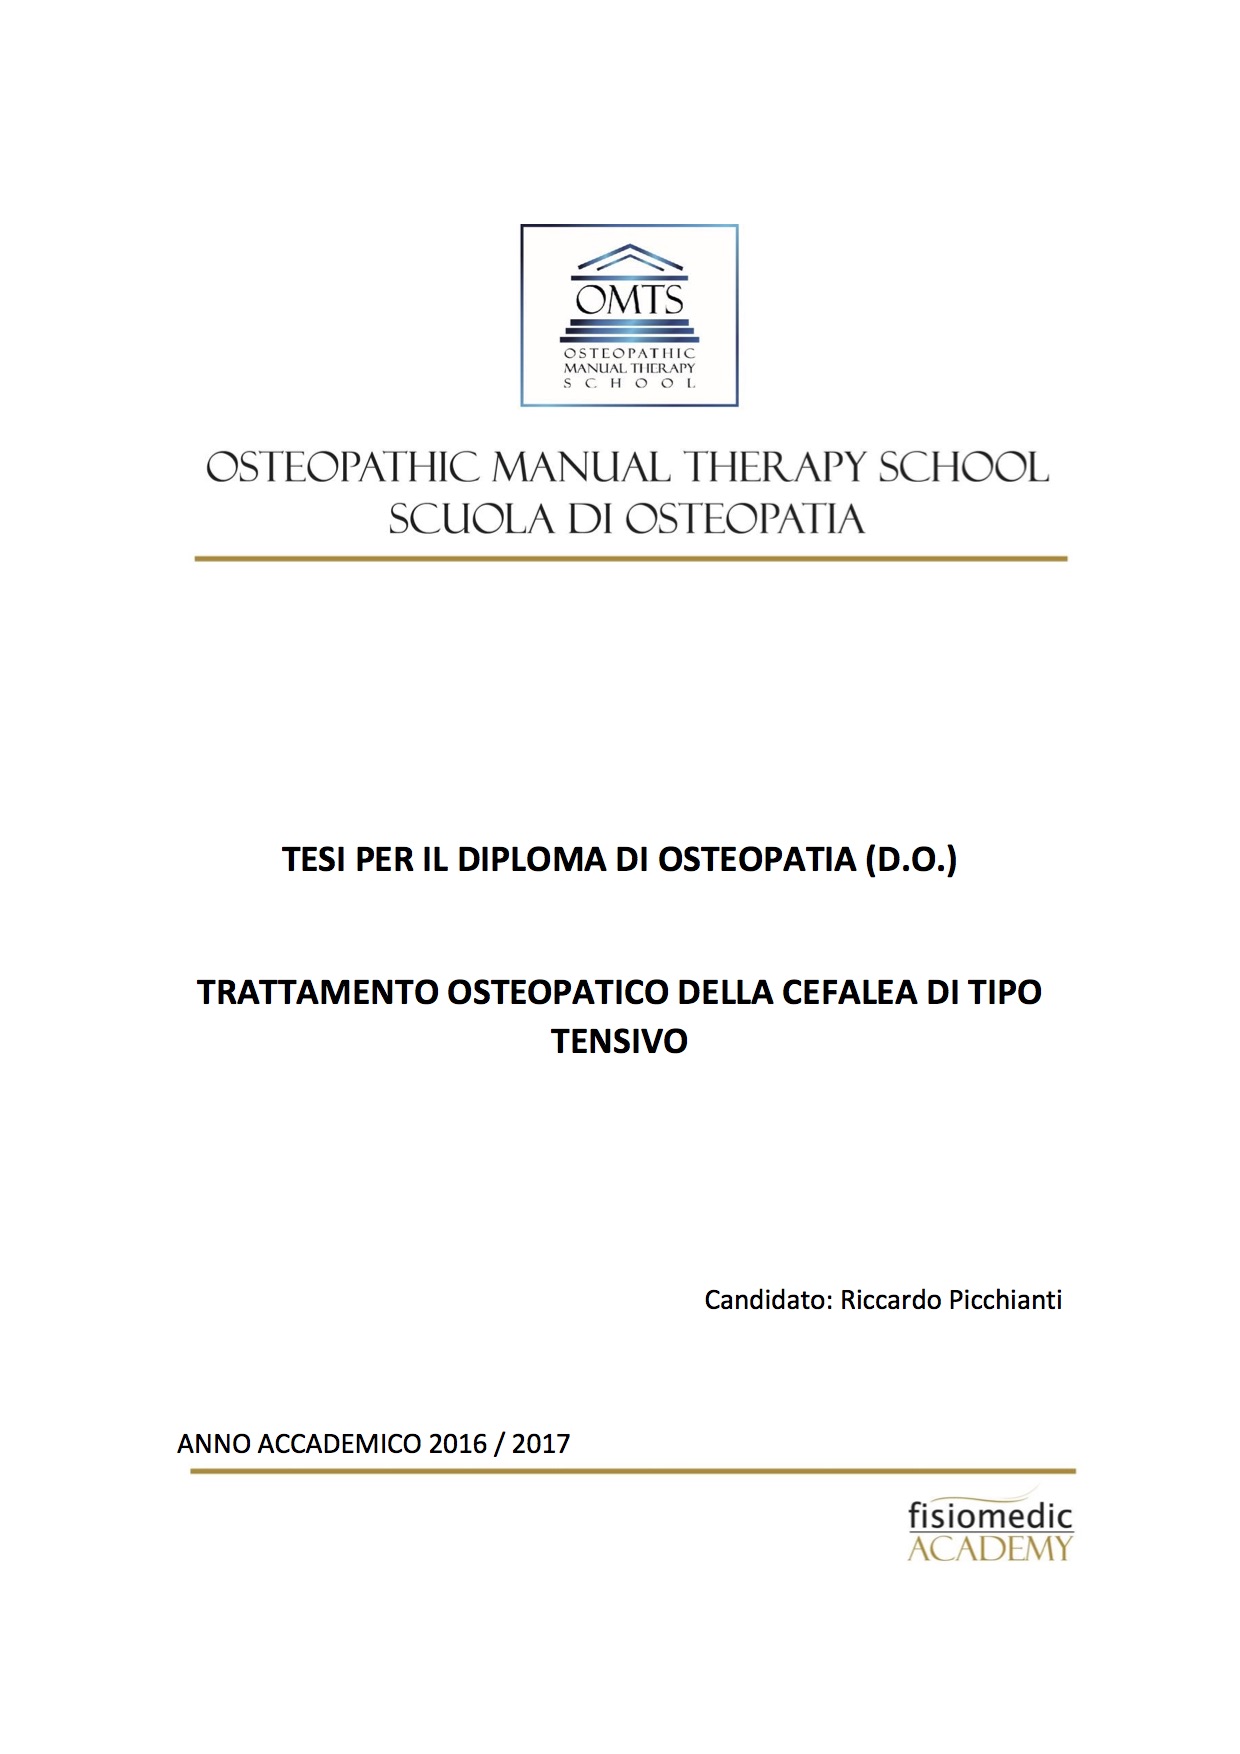 Riccardo Picchianti Tesi Diploma Osteopatia 2017